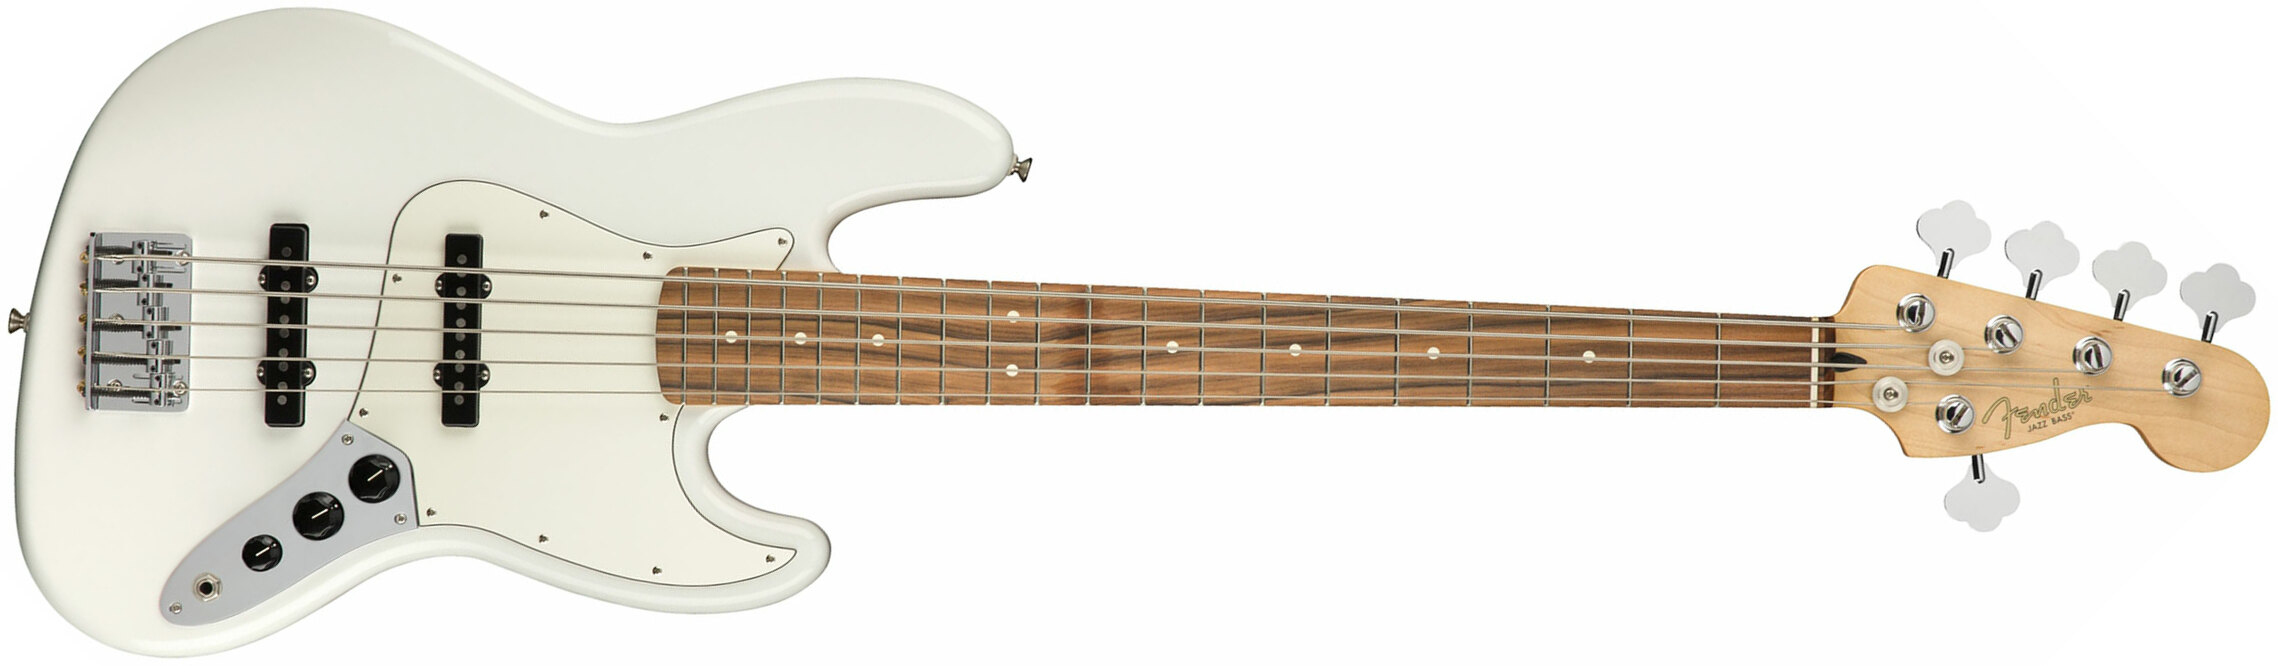 Fender Jazz Bass Player V 5-cordes Mex Pf - Polar White - Bajo eléctrico de cuerpo sólido - Main picture